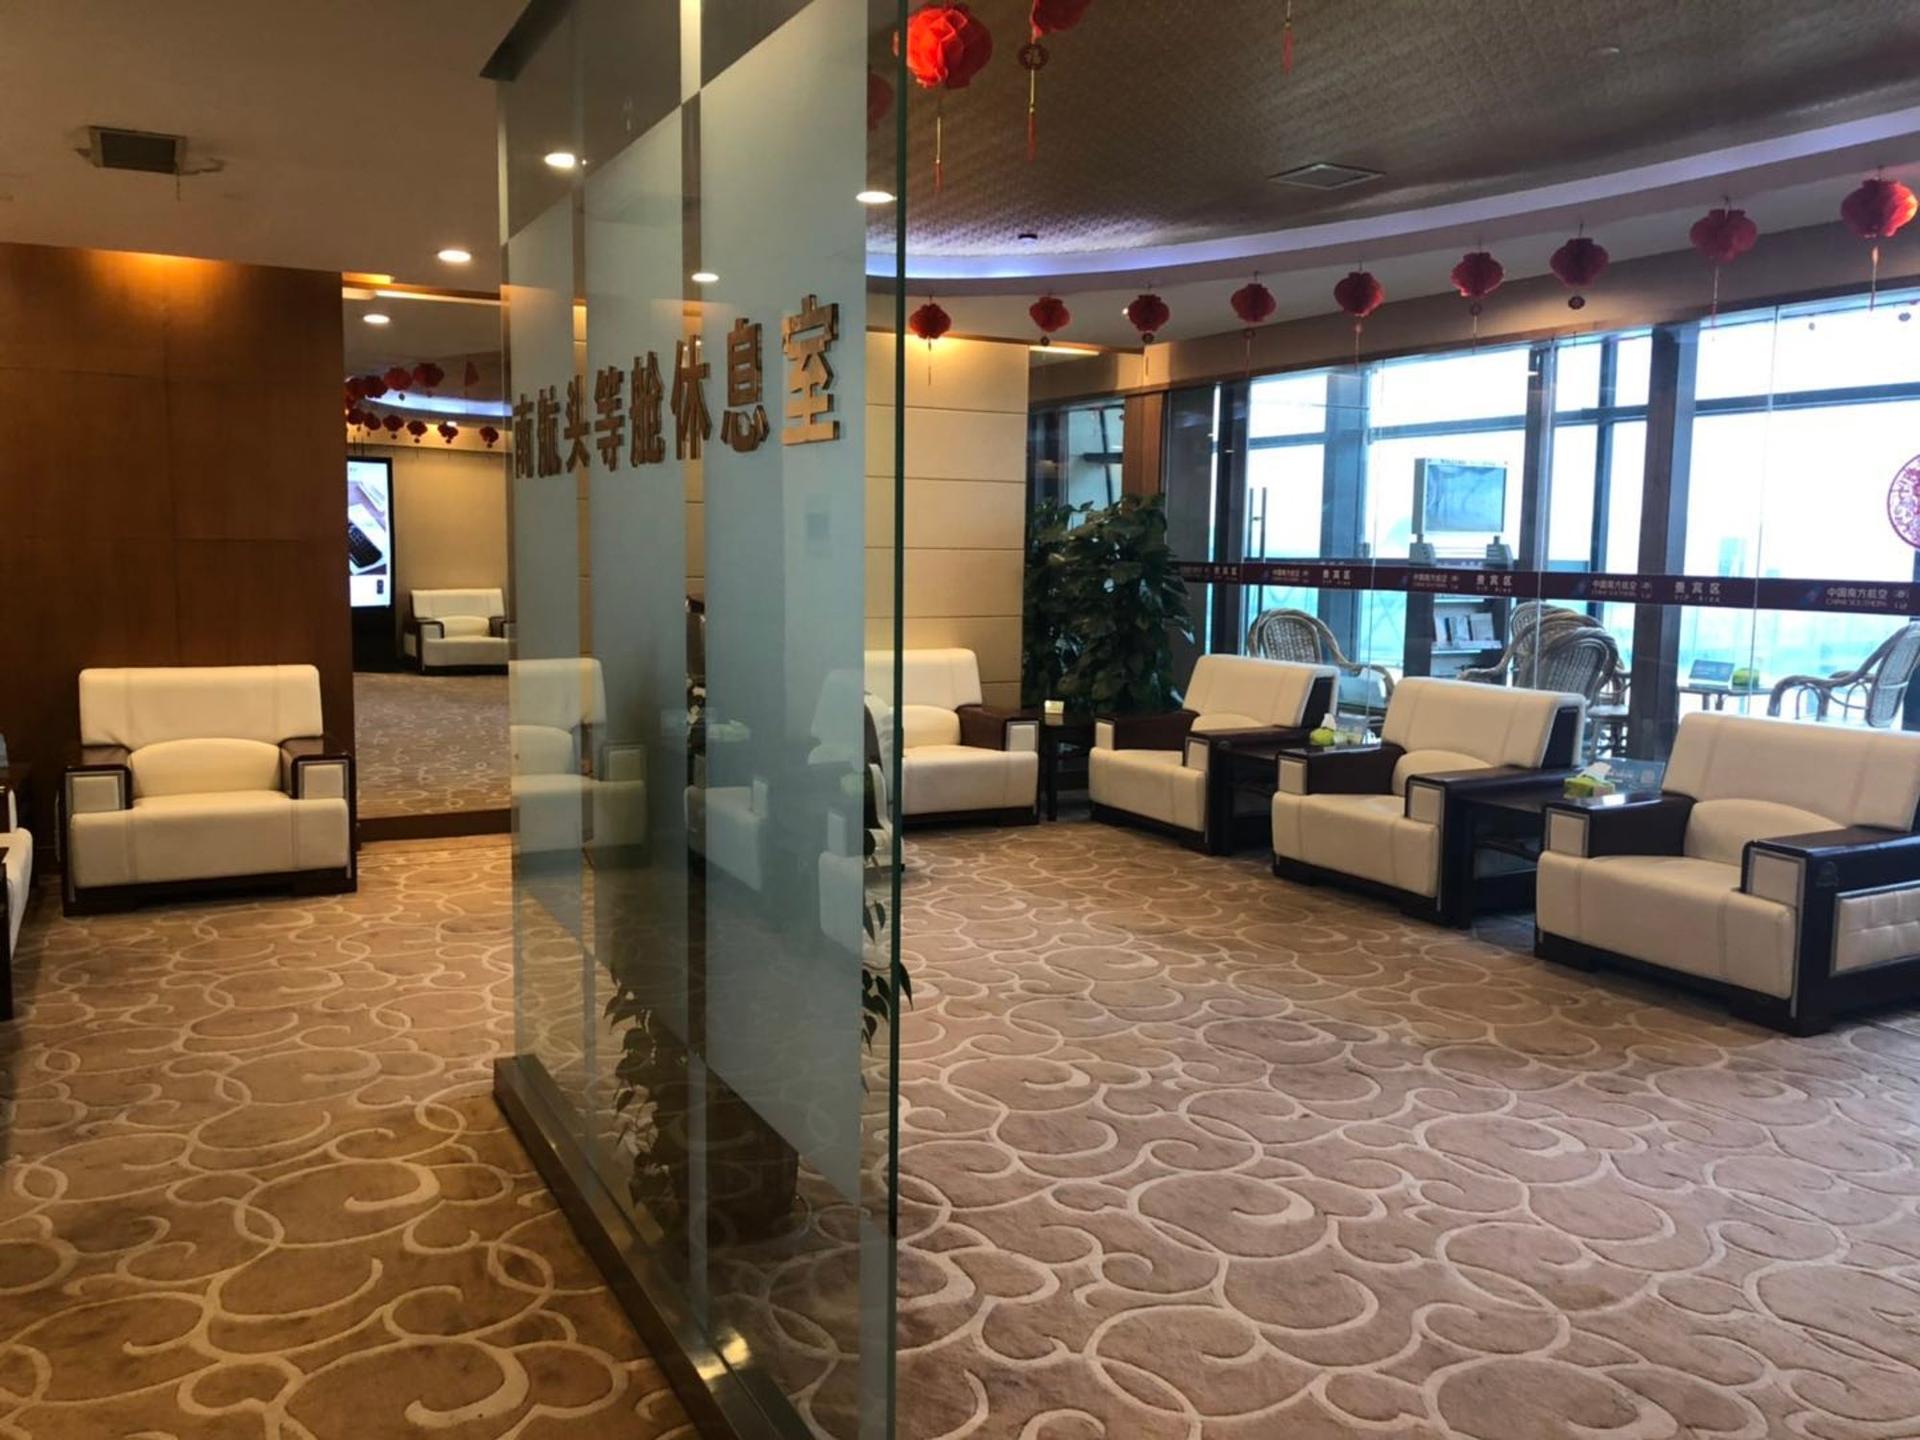 China Southern First Class Lounge image 1 of 1